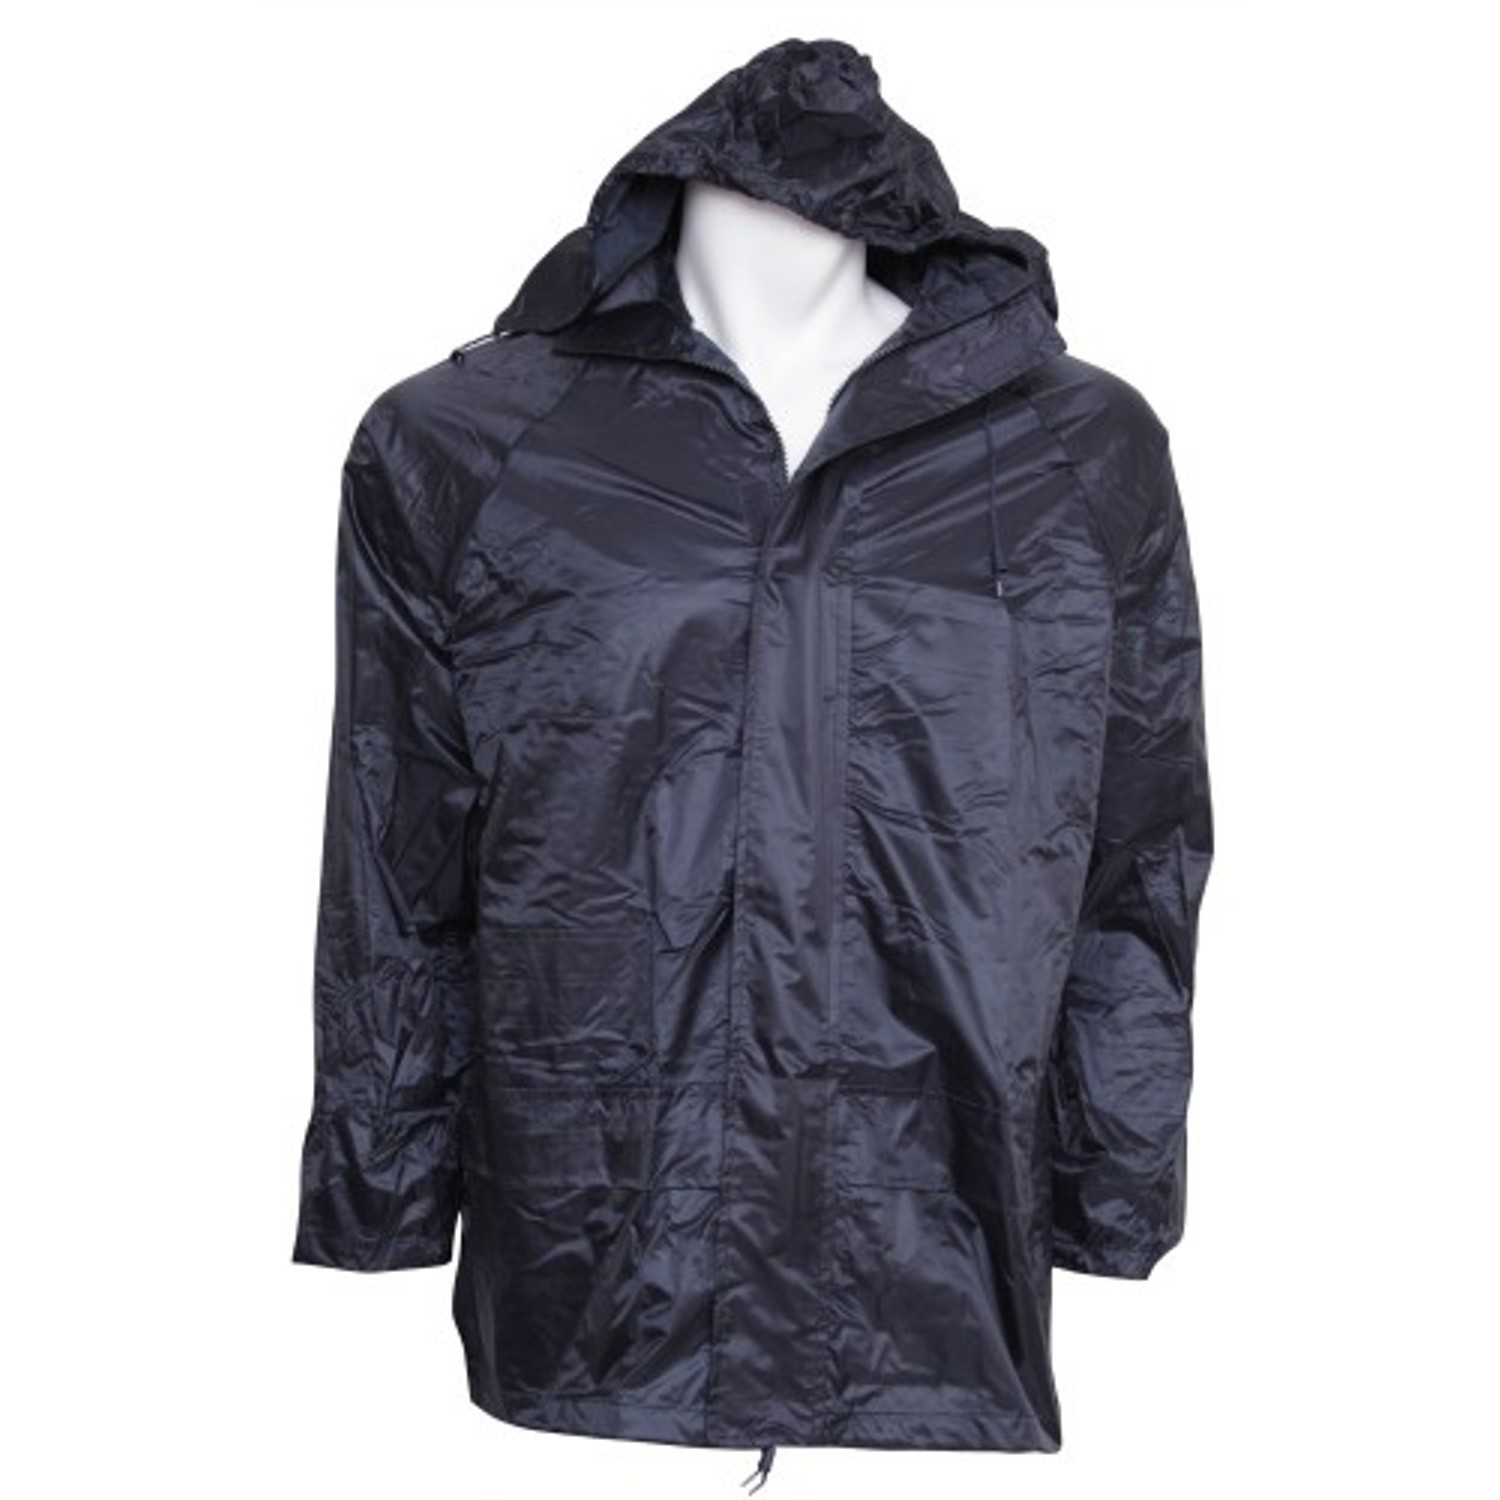 Adult Mens Waterproof Hooded Outdoor Rain Jacket Lightweight Black Navy ...